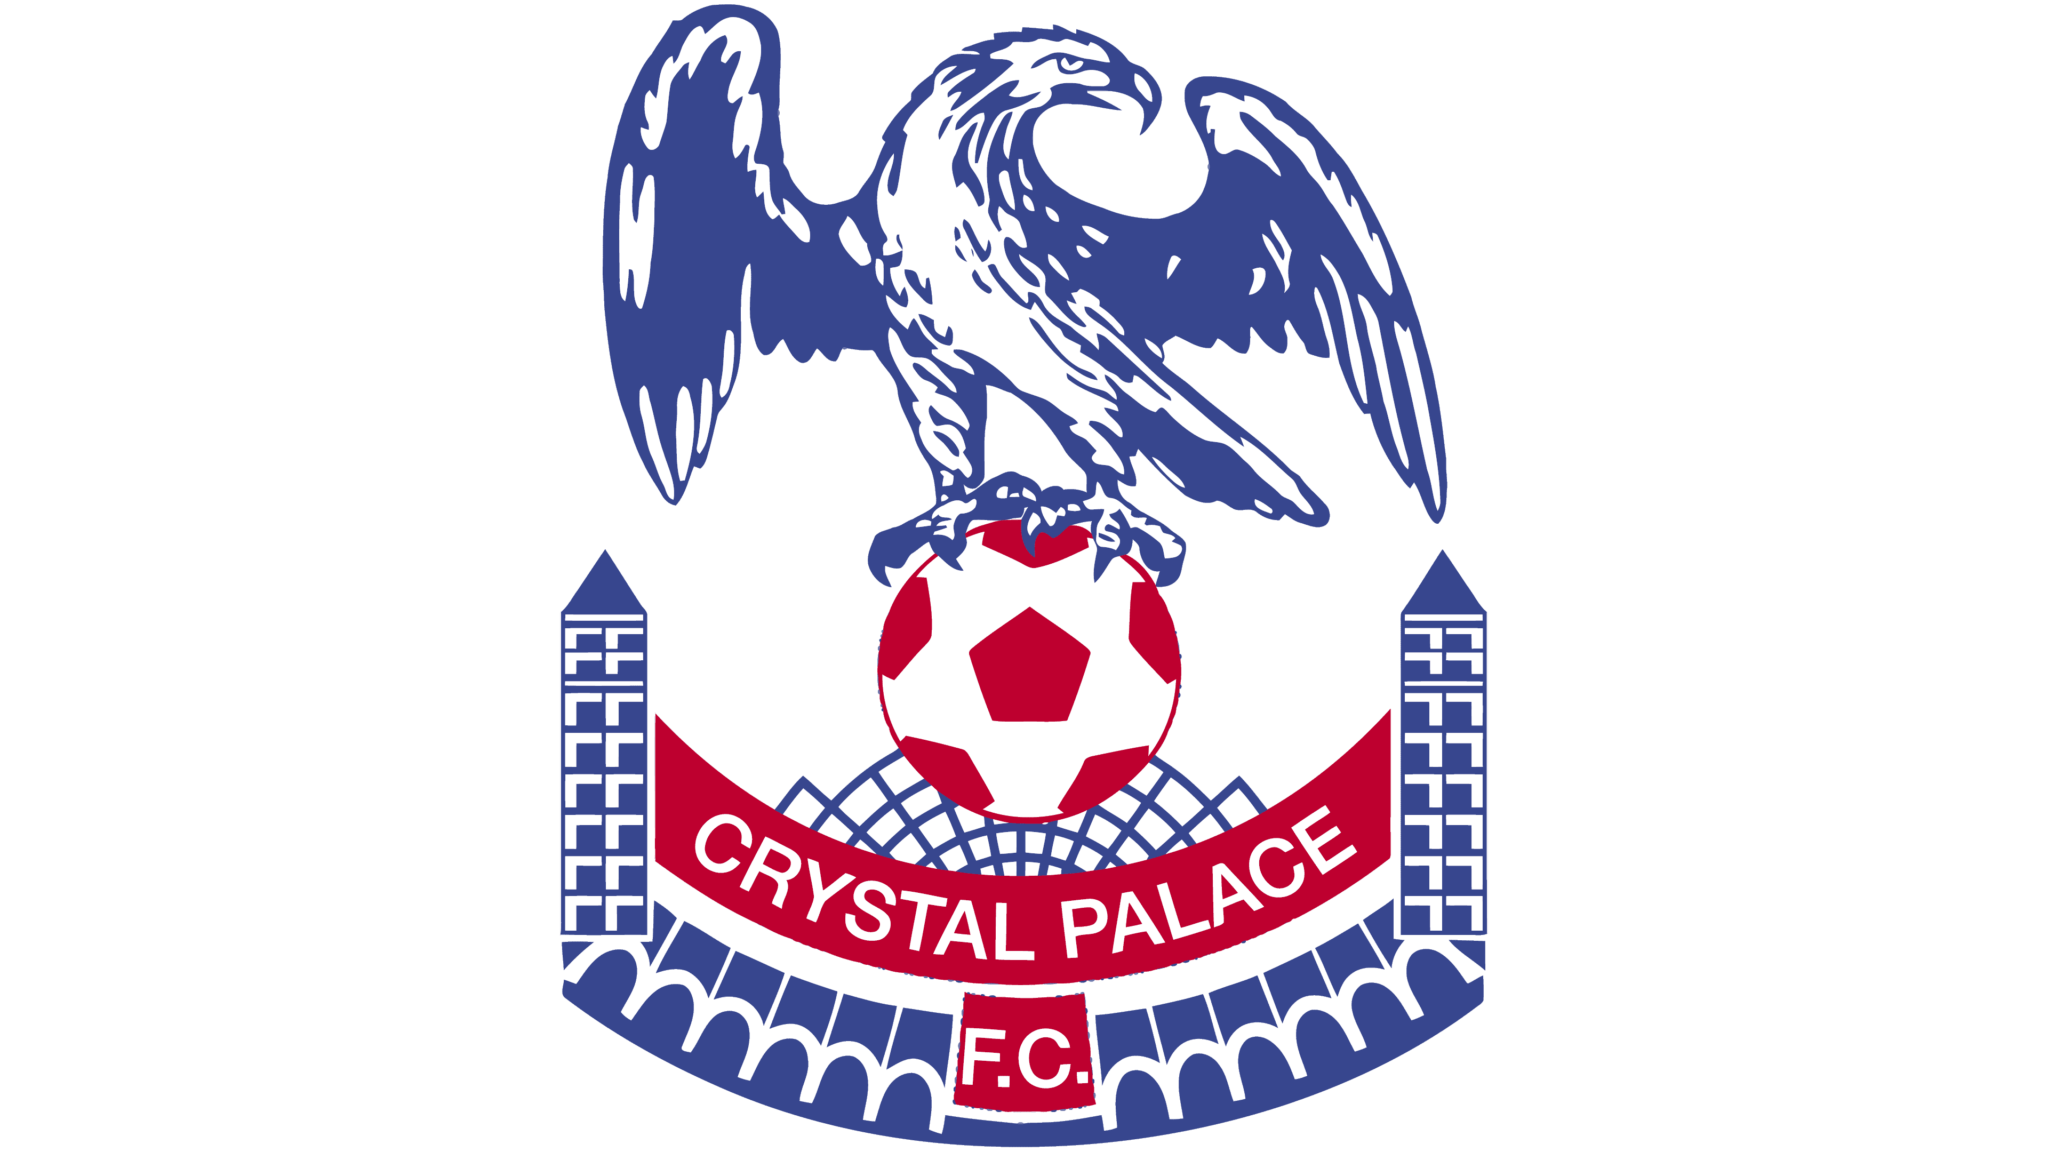 BREAKING NEWS; Report: Everton Close to Landing Top Crystal Palace Target.